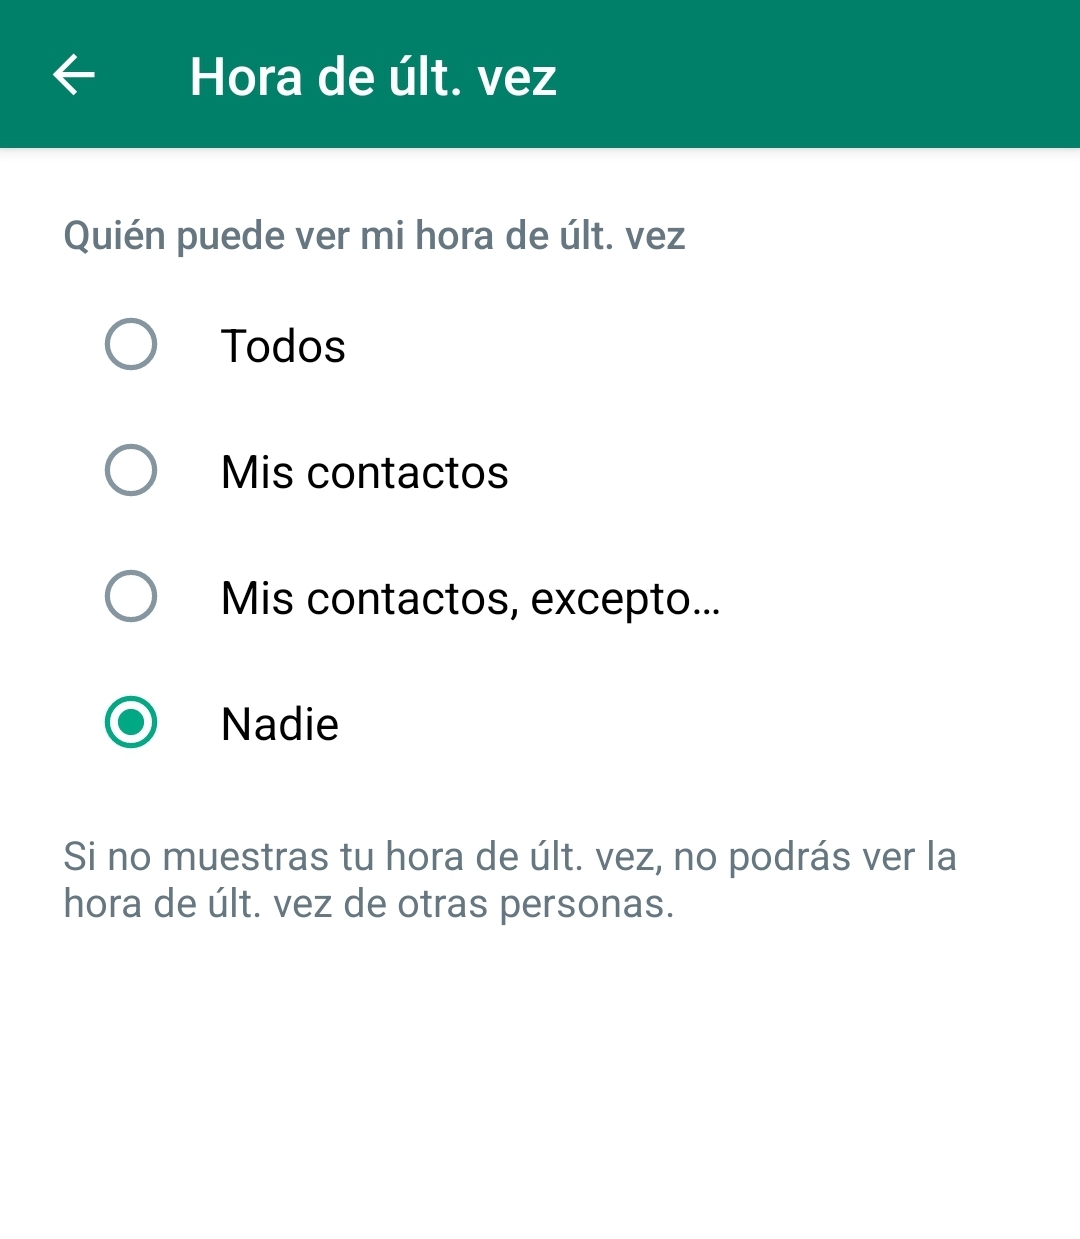 WhatsApp added new privacy settings